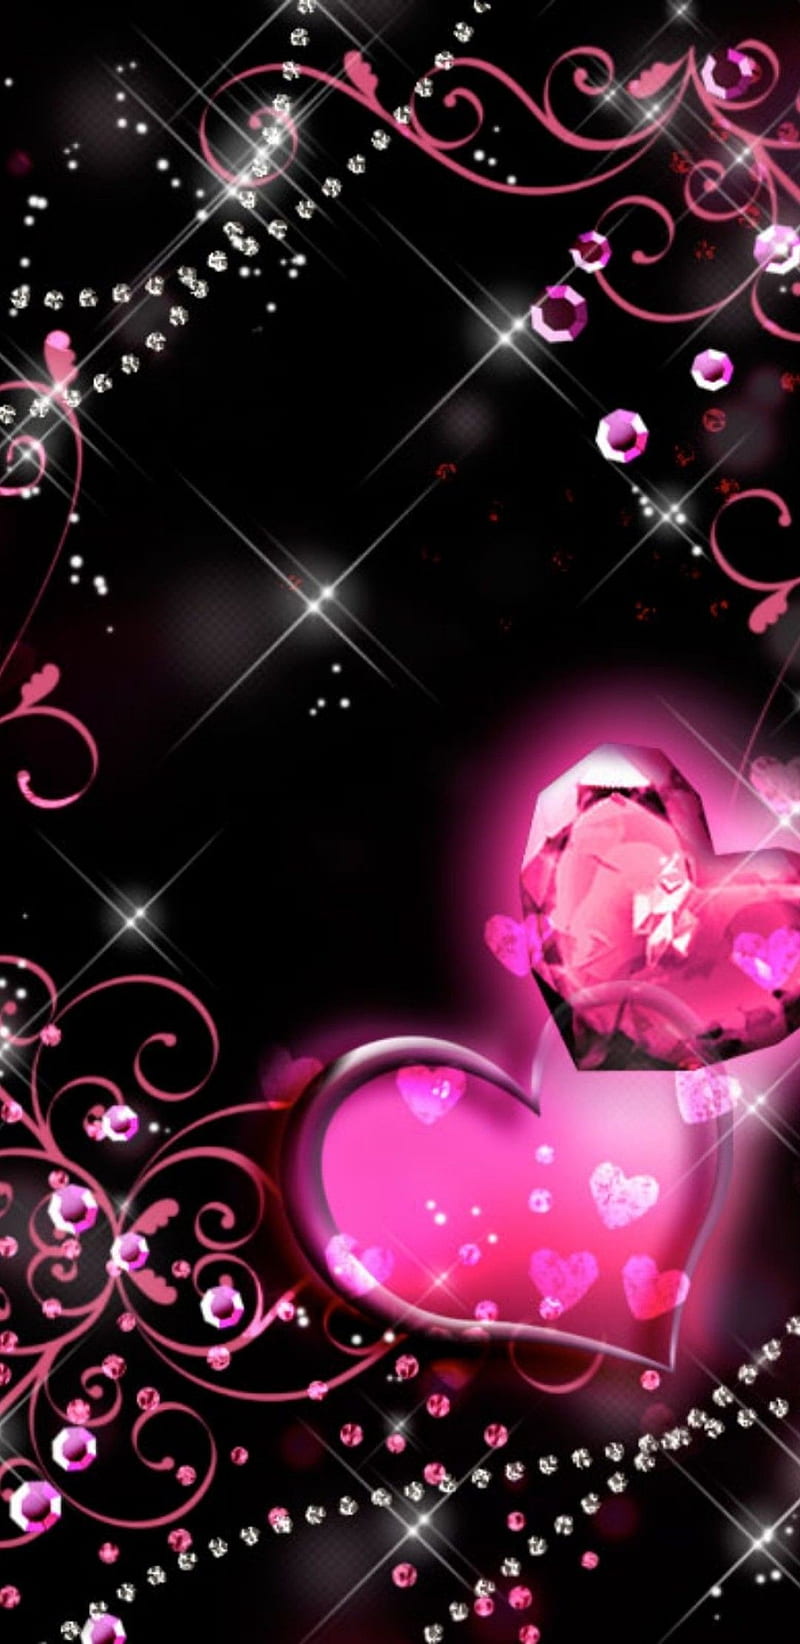 Pink diamonds live wallpaper - Apps on Google Play